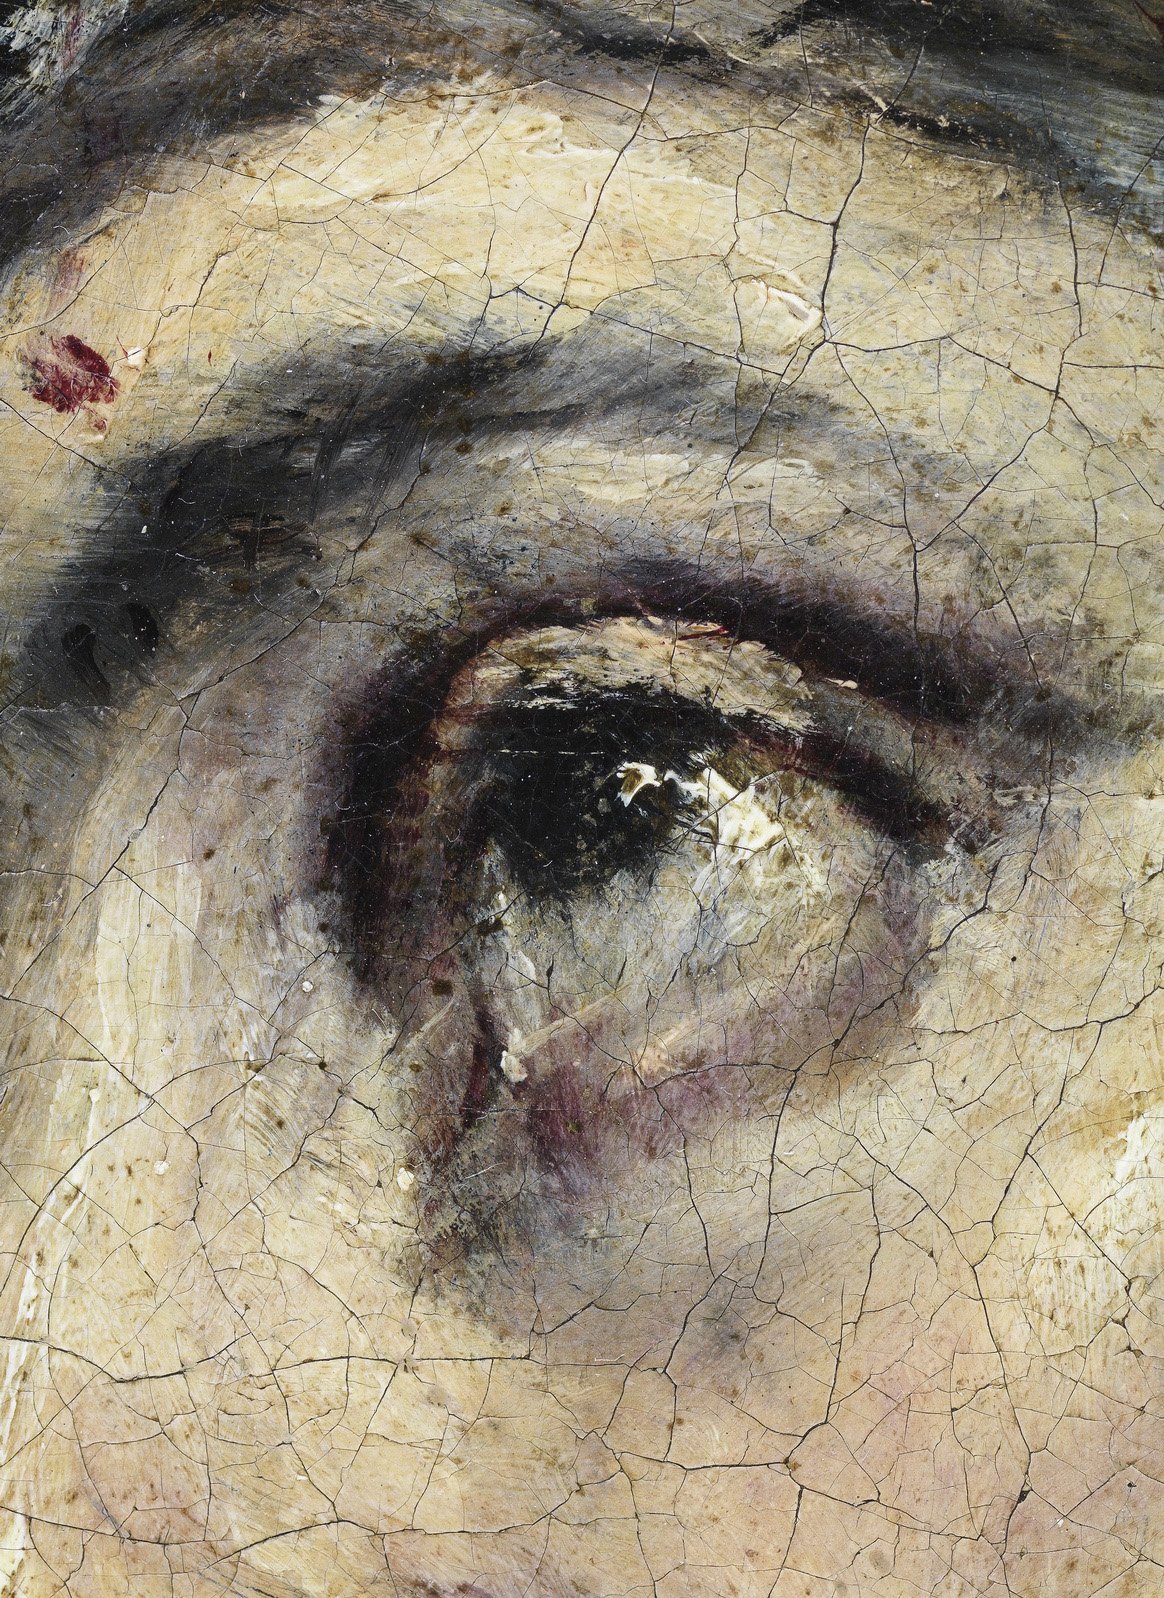 El Greco, “Christ embraced the cross”, detail, 1587-96, Museo Thyssen-Bornemisza